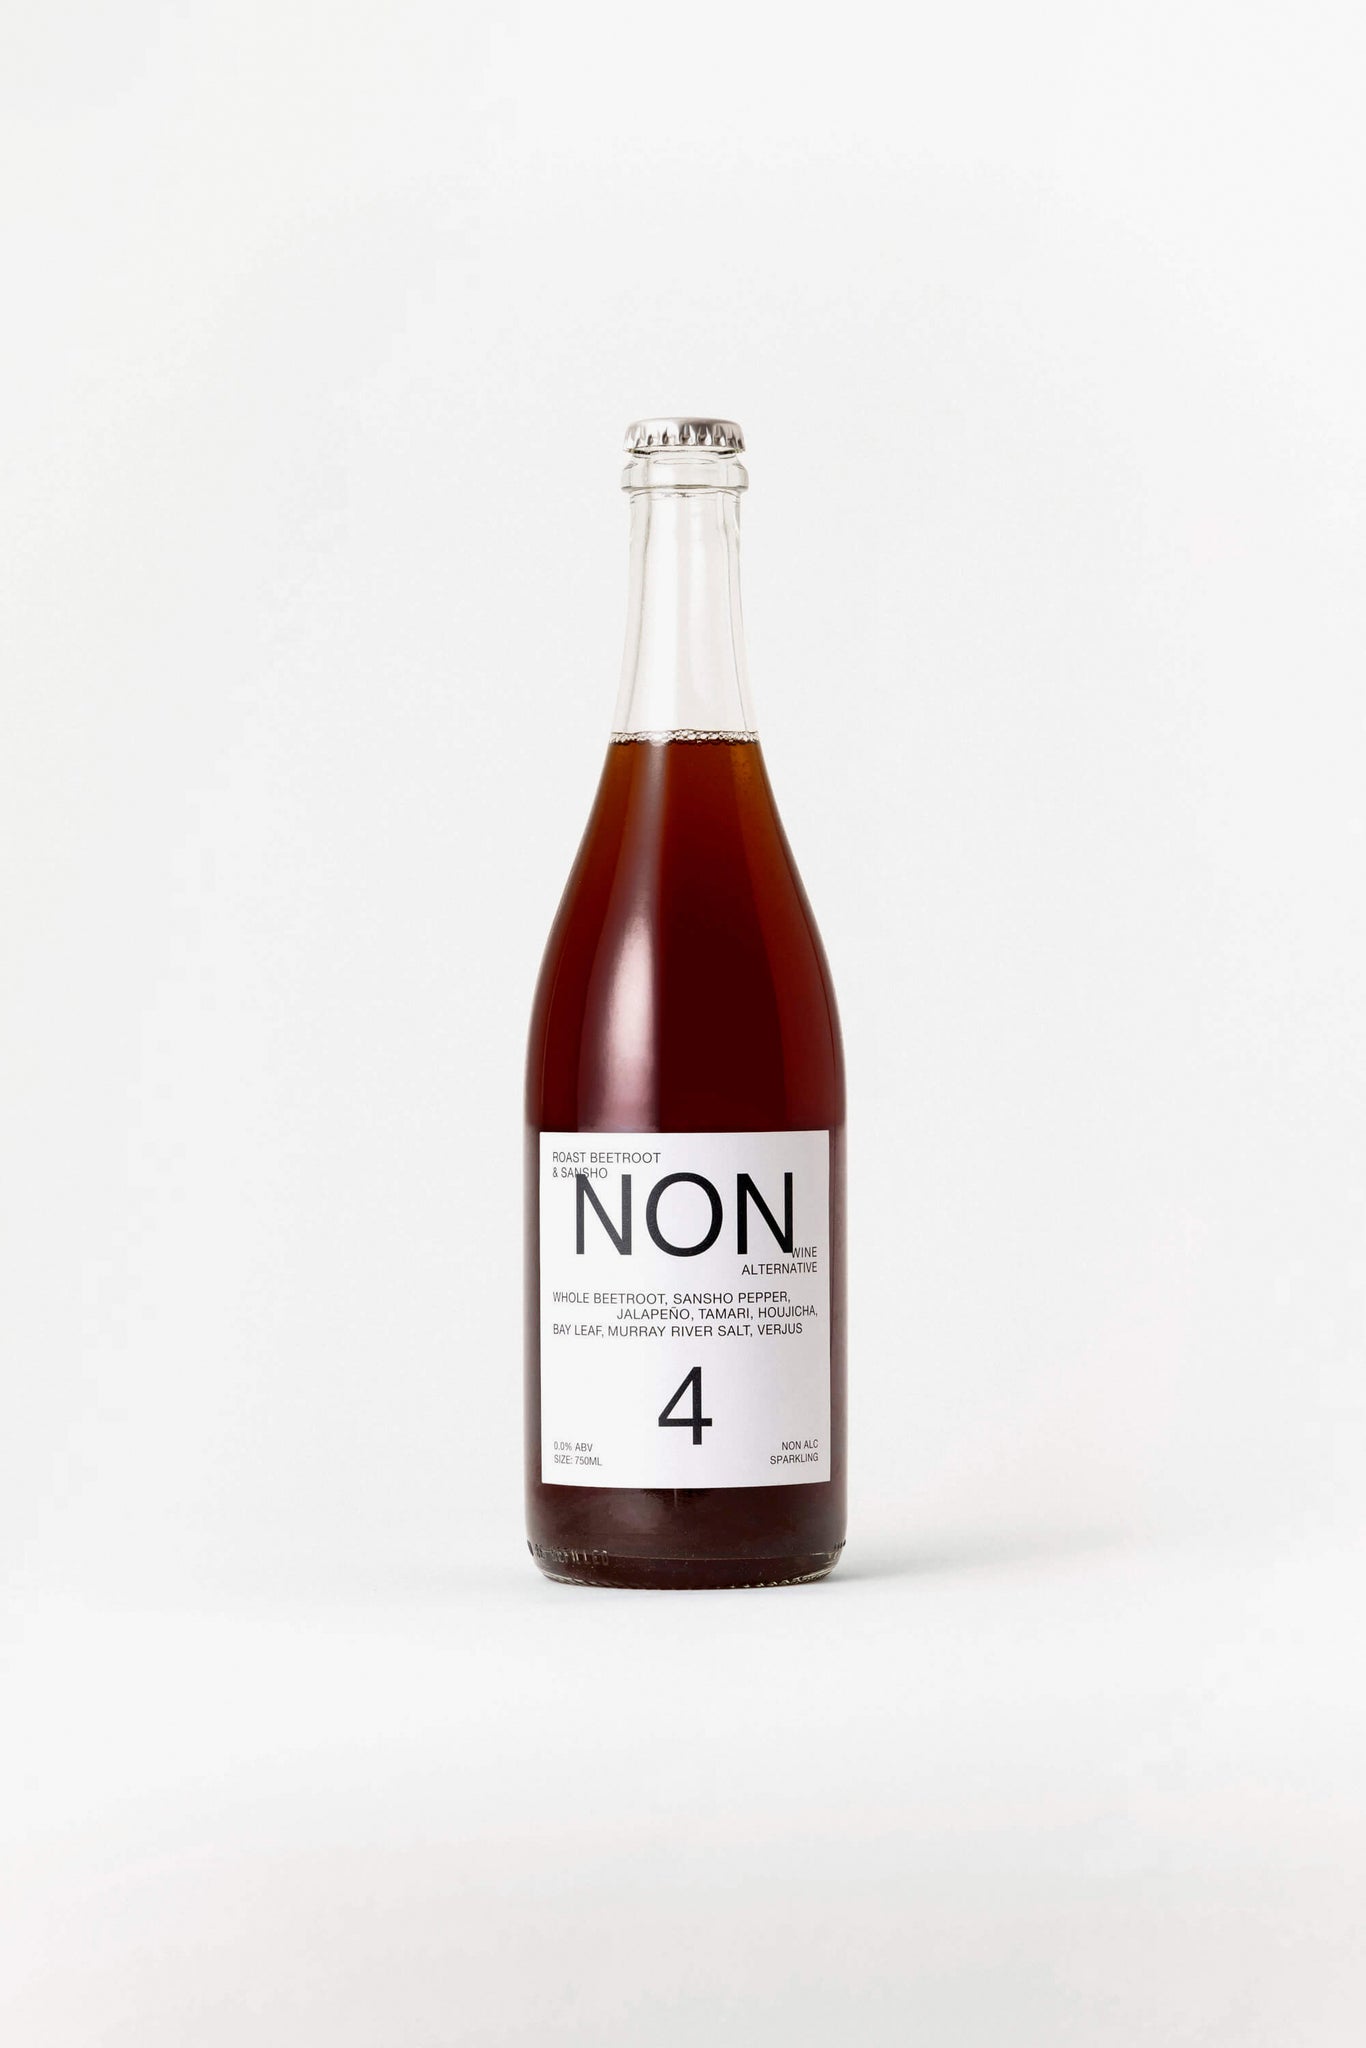 NON4 Roast Beetroot & Sansho Bottle front label